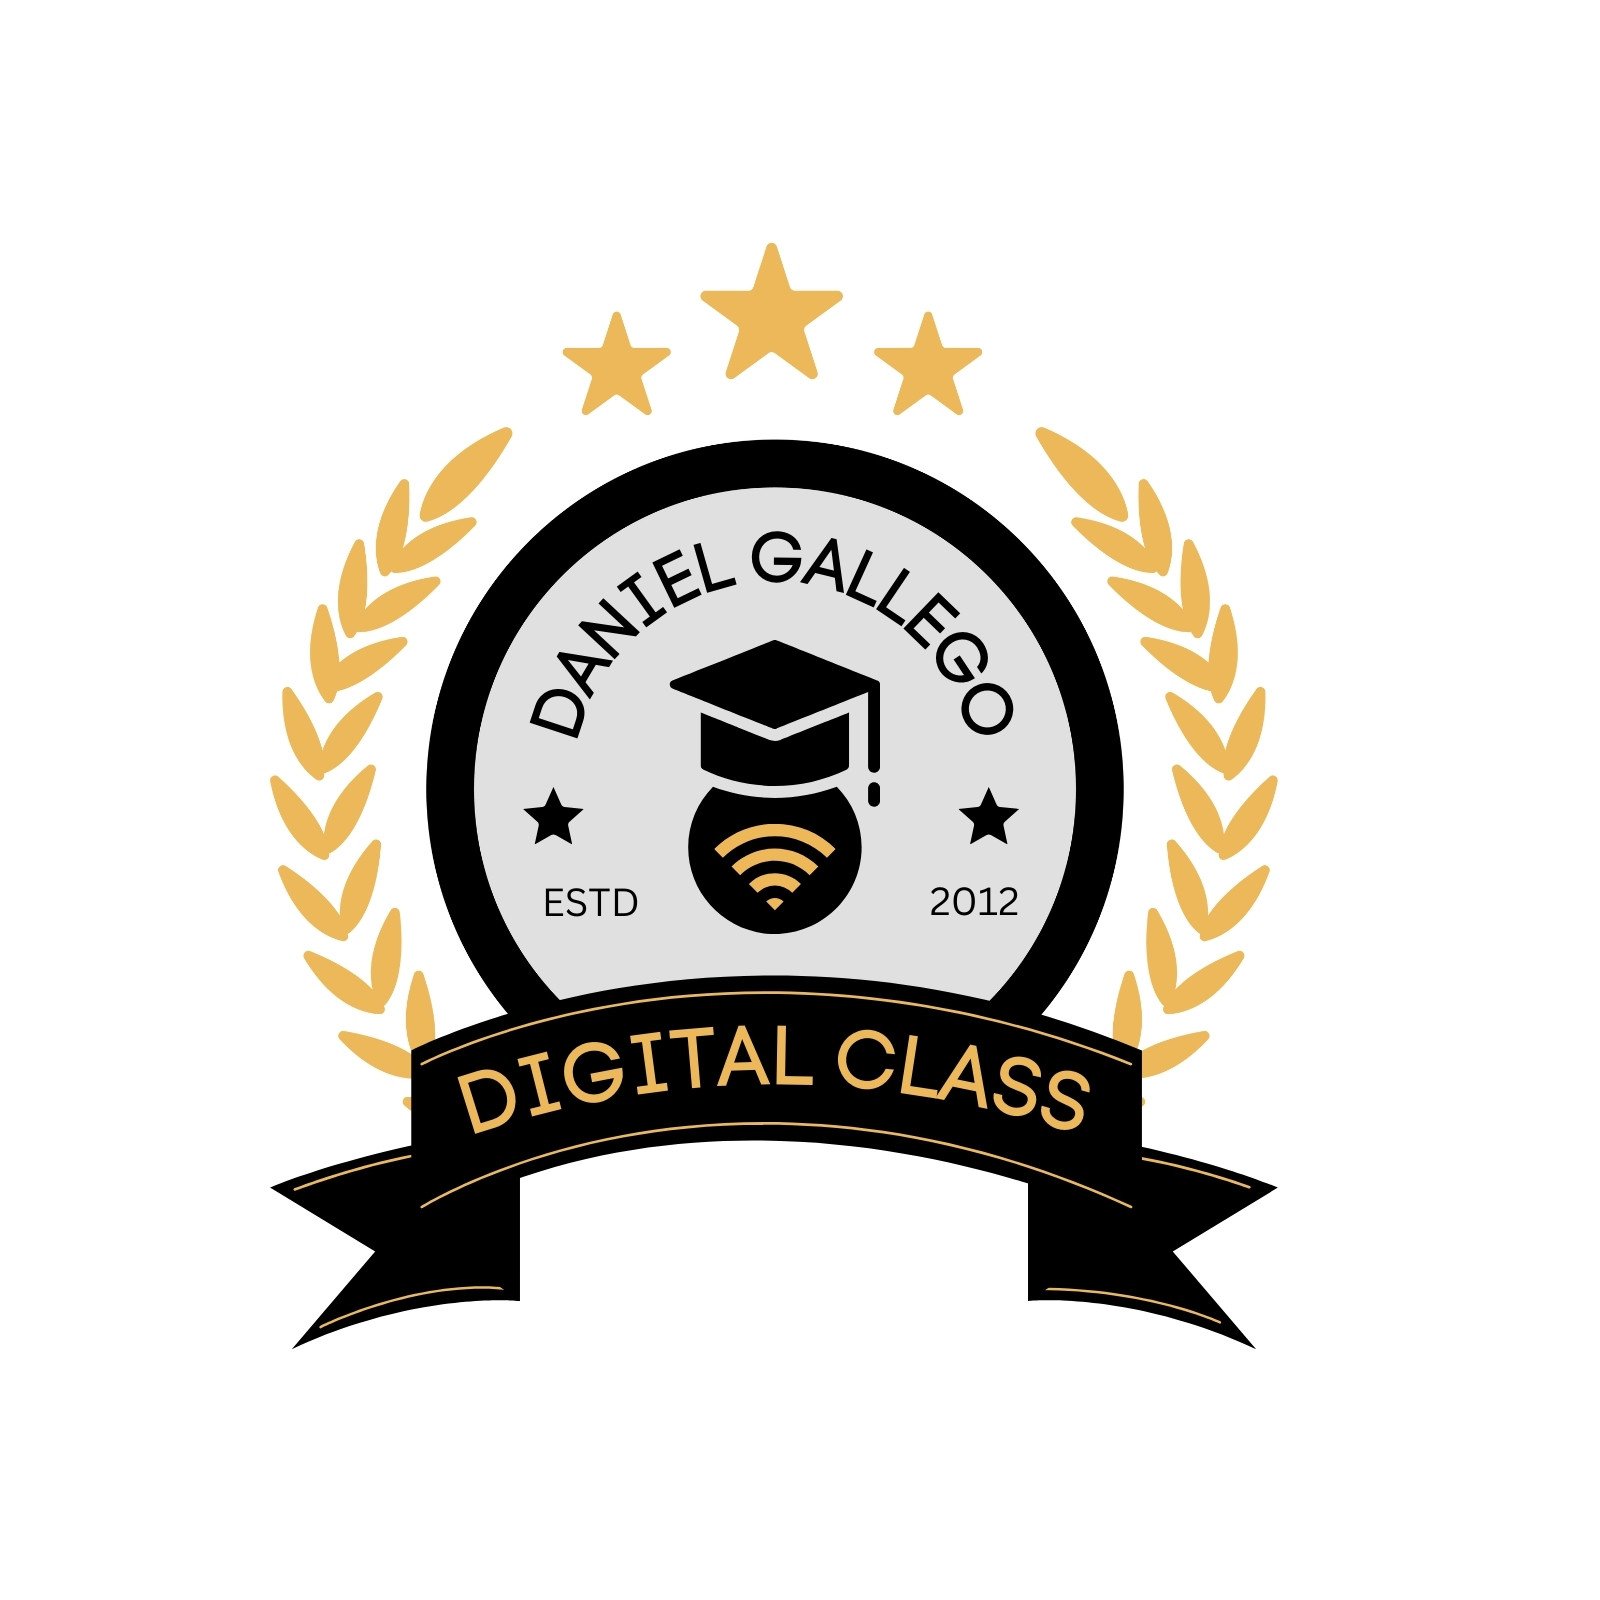 Meet The Designer's Class, a design-focused digital education platform